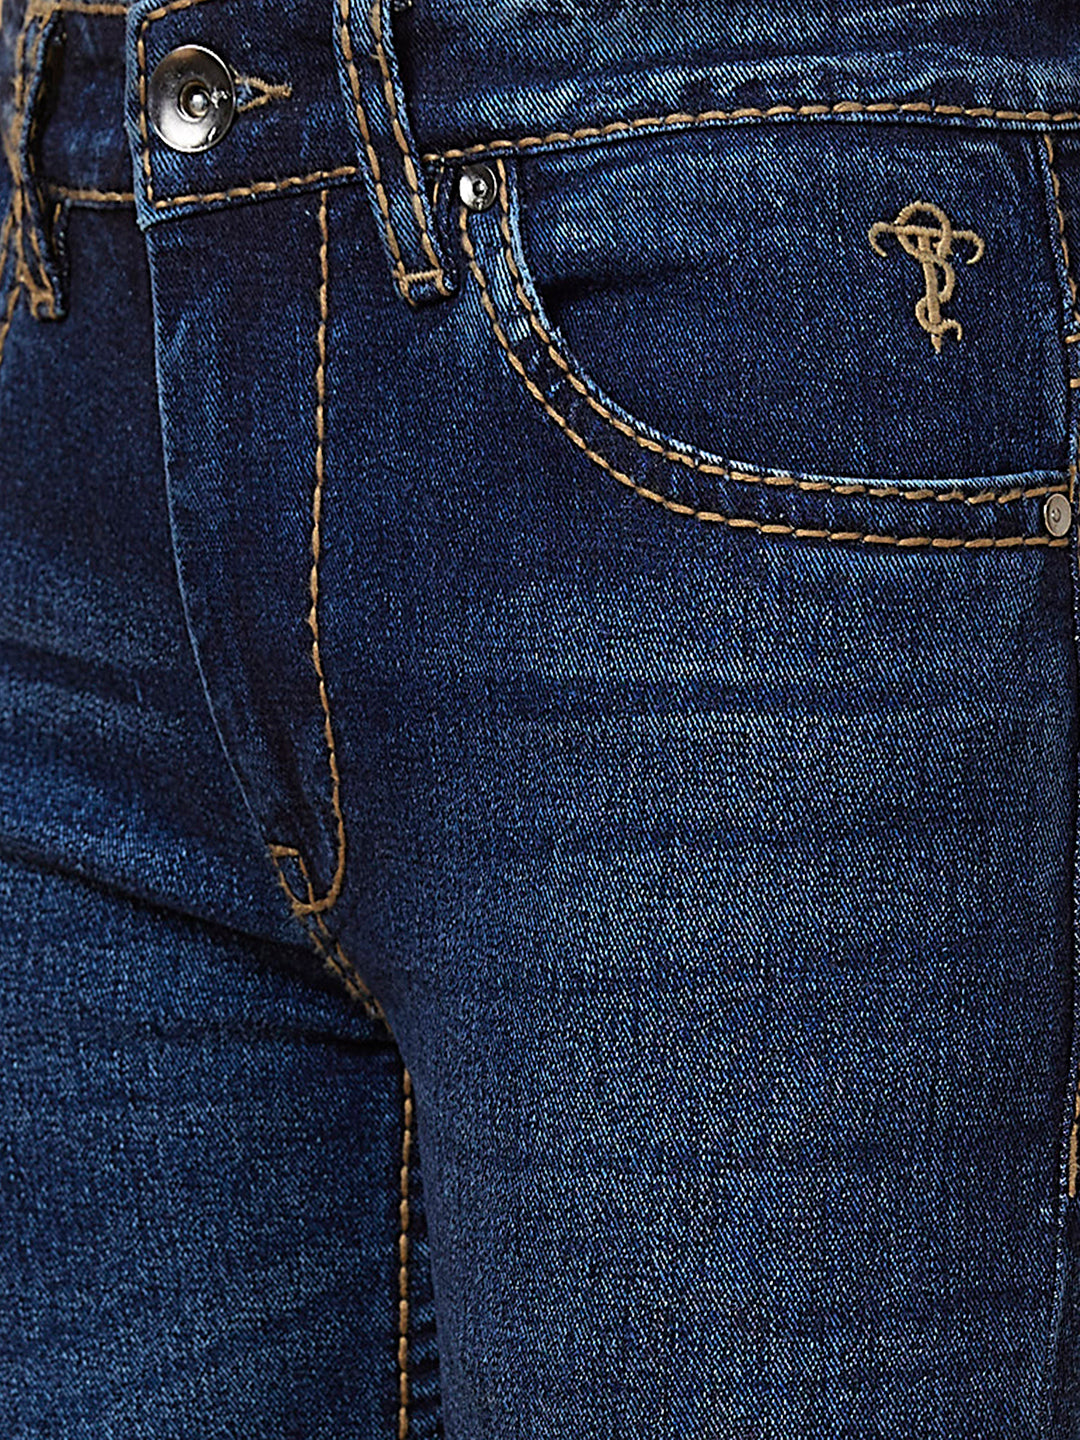 Indigo Blue Boot-cut Jeans with Saddle Stitch